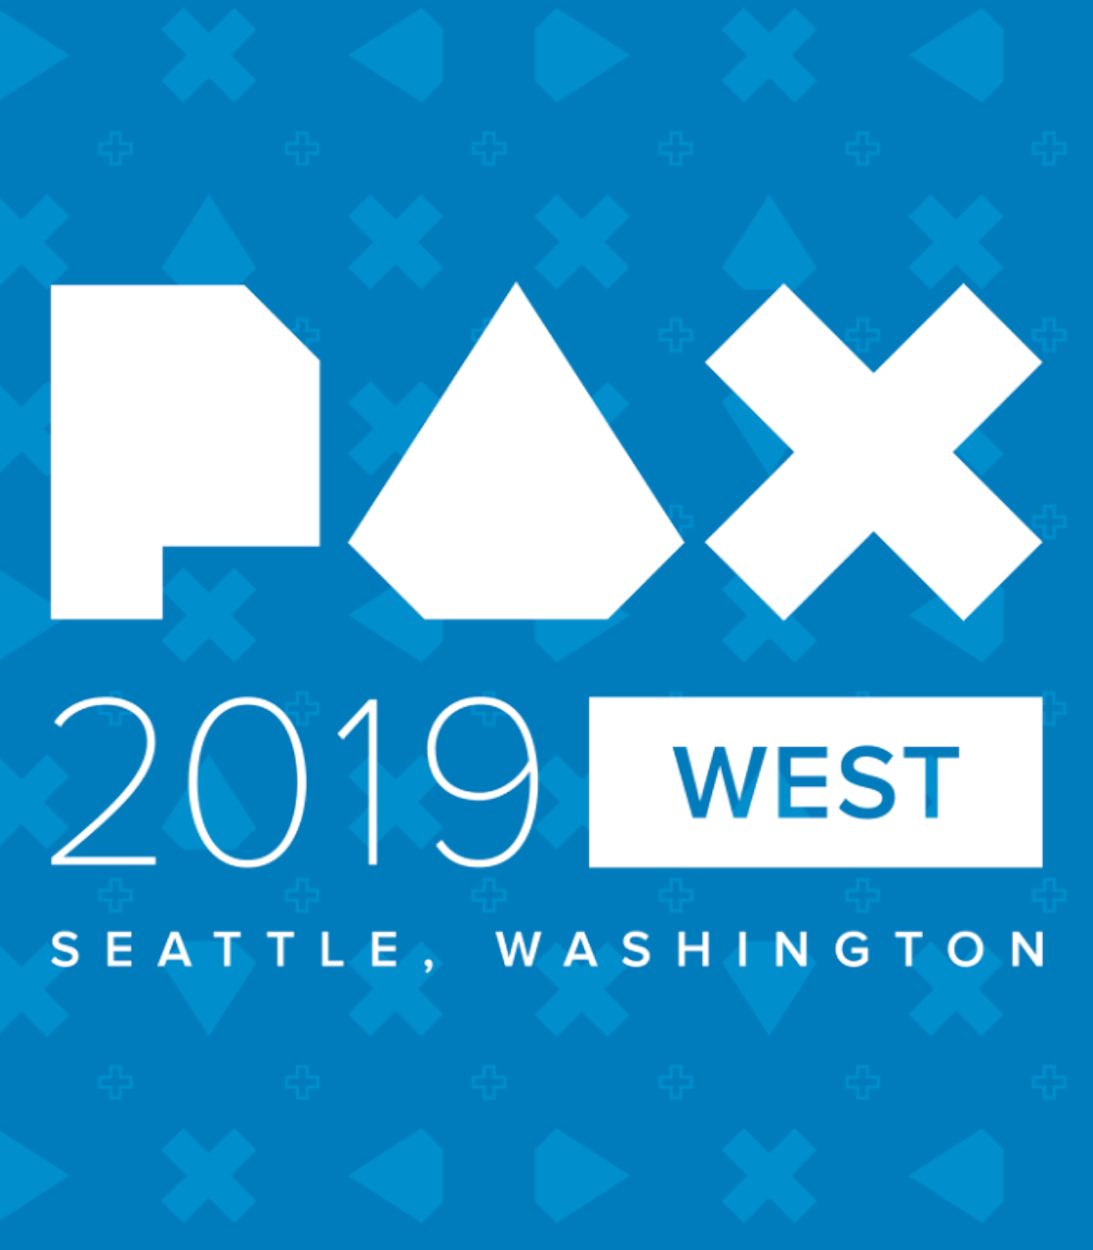 pax west logo vertical